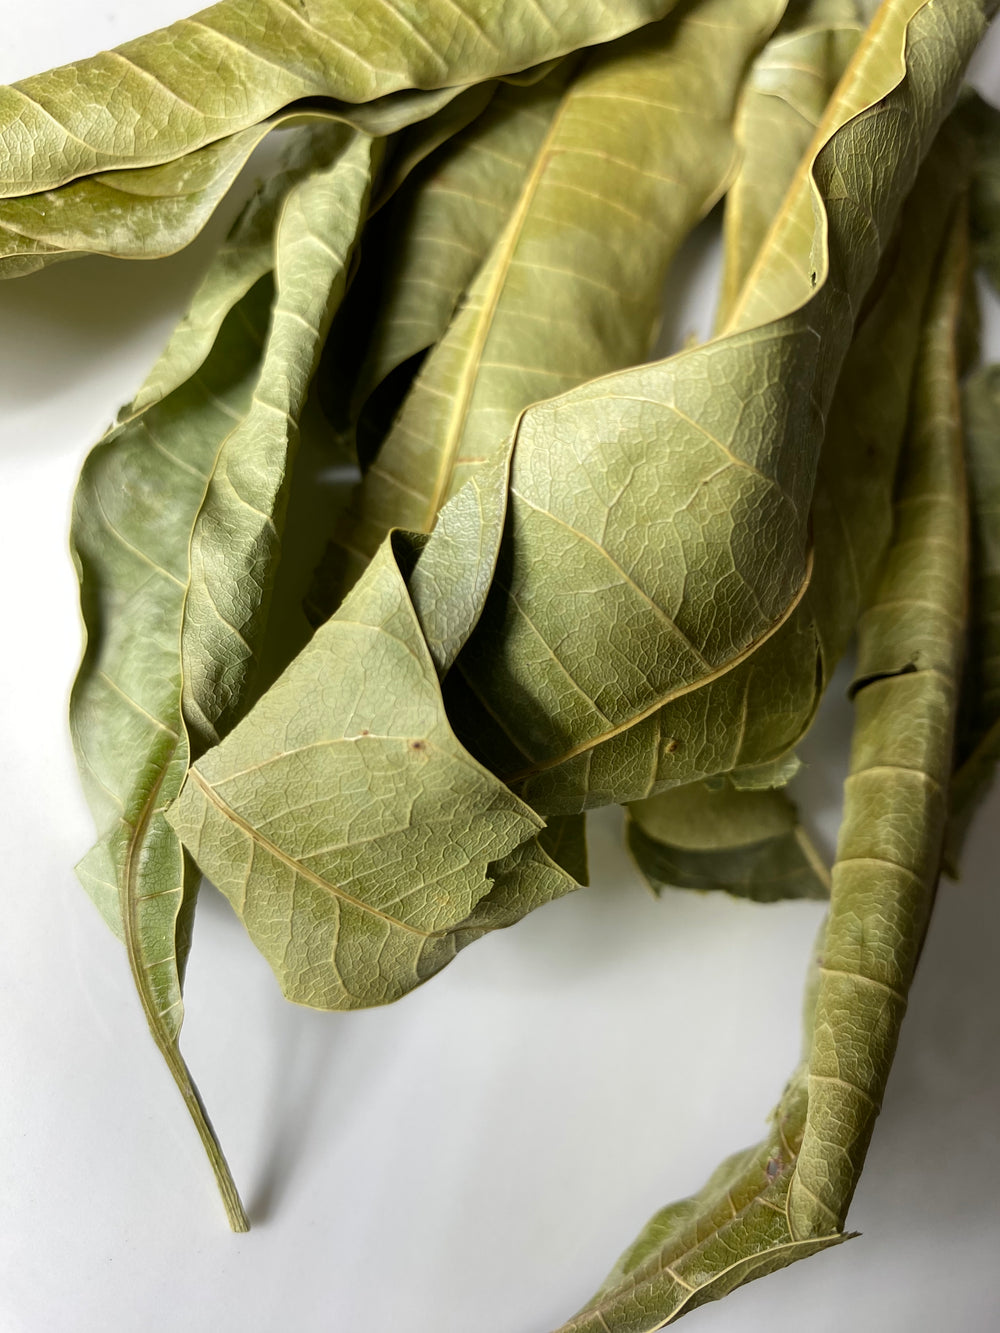 Naturally Grown Mango Leaves (Mangifera indica), Whole Leaf - 1 oz (28g) - Ayoni Wellness